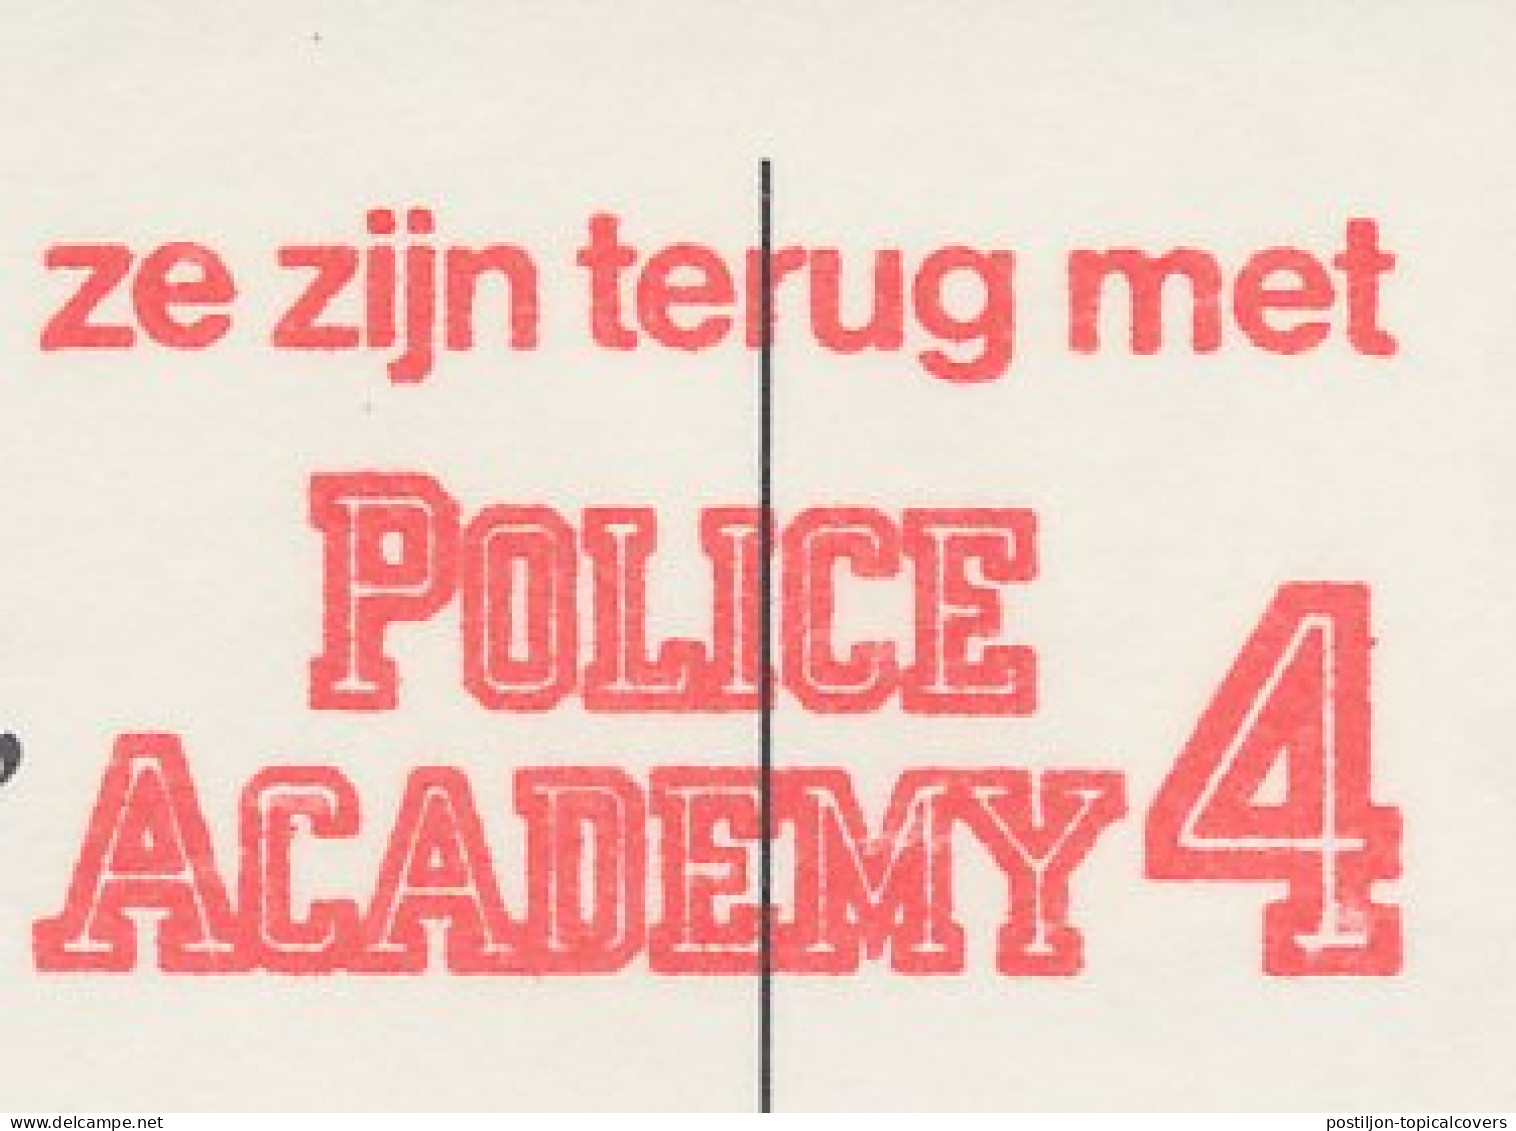 Meter Top Cut Netherlands 1987 Police Academy 4 - Movie - Kino